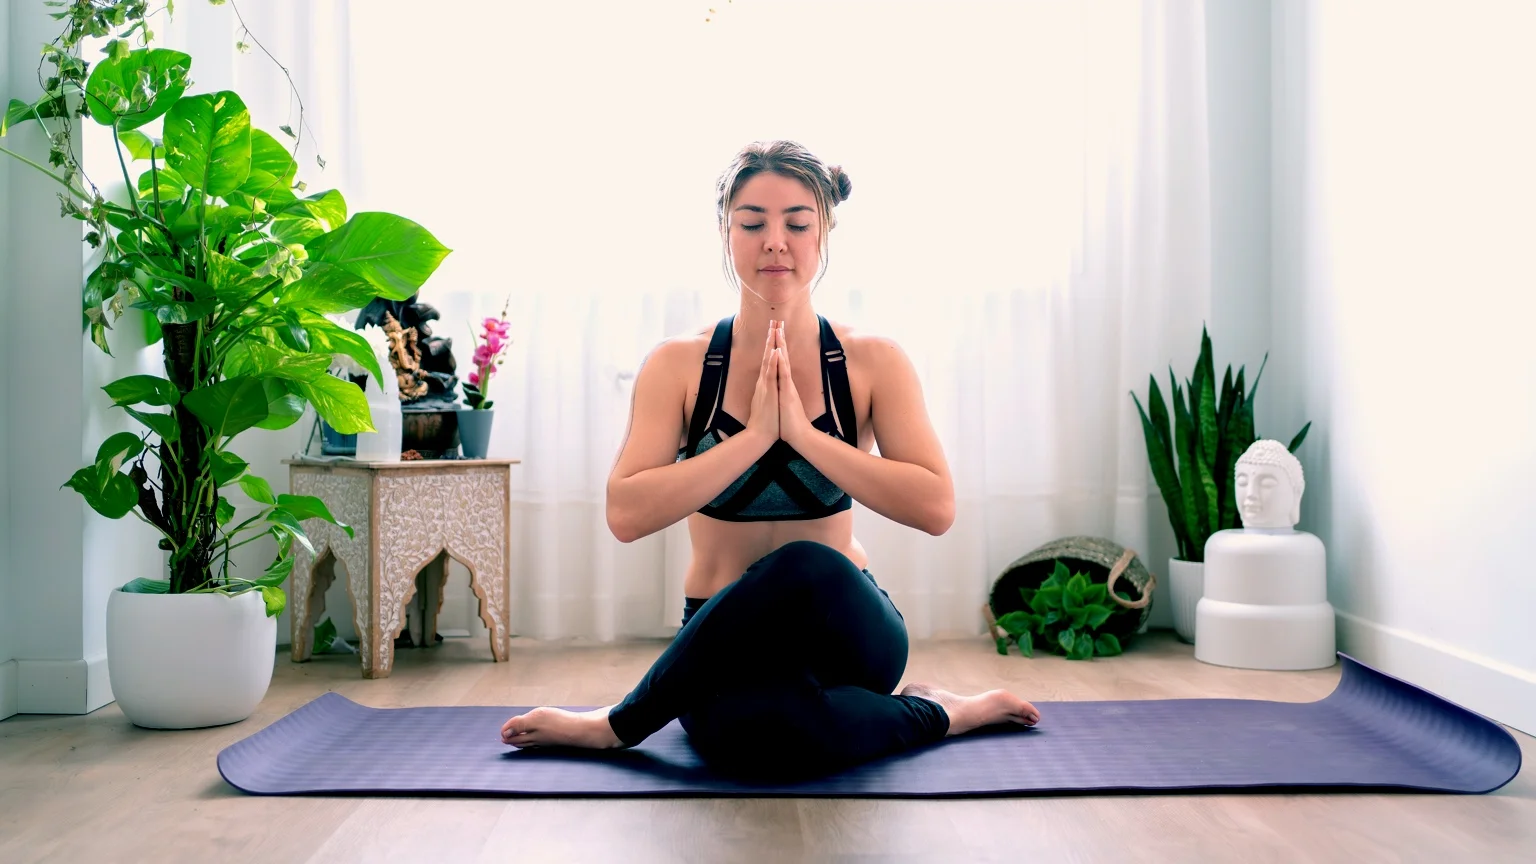 Bikram Yoga Poses Guide For Everyone - Yoga Poses 4 You